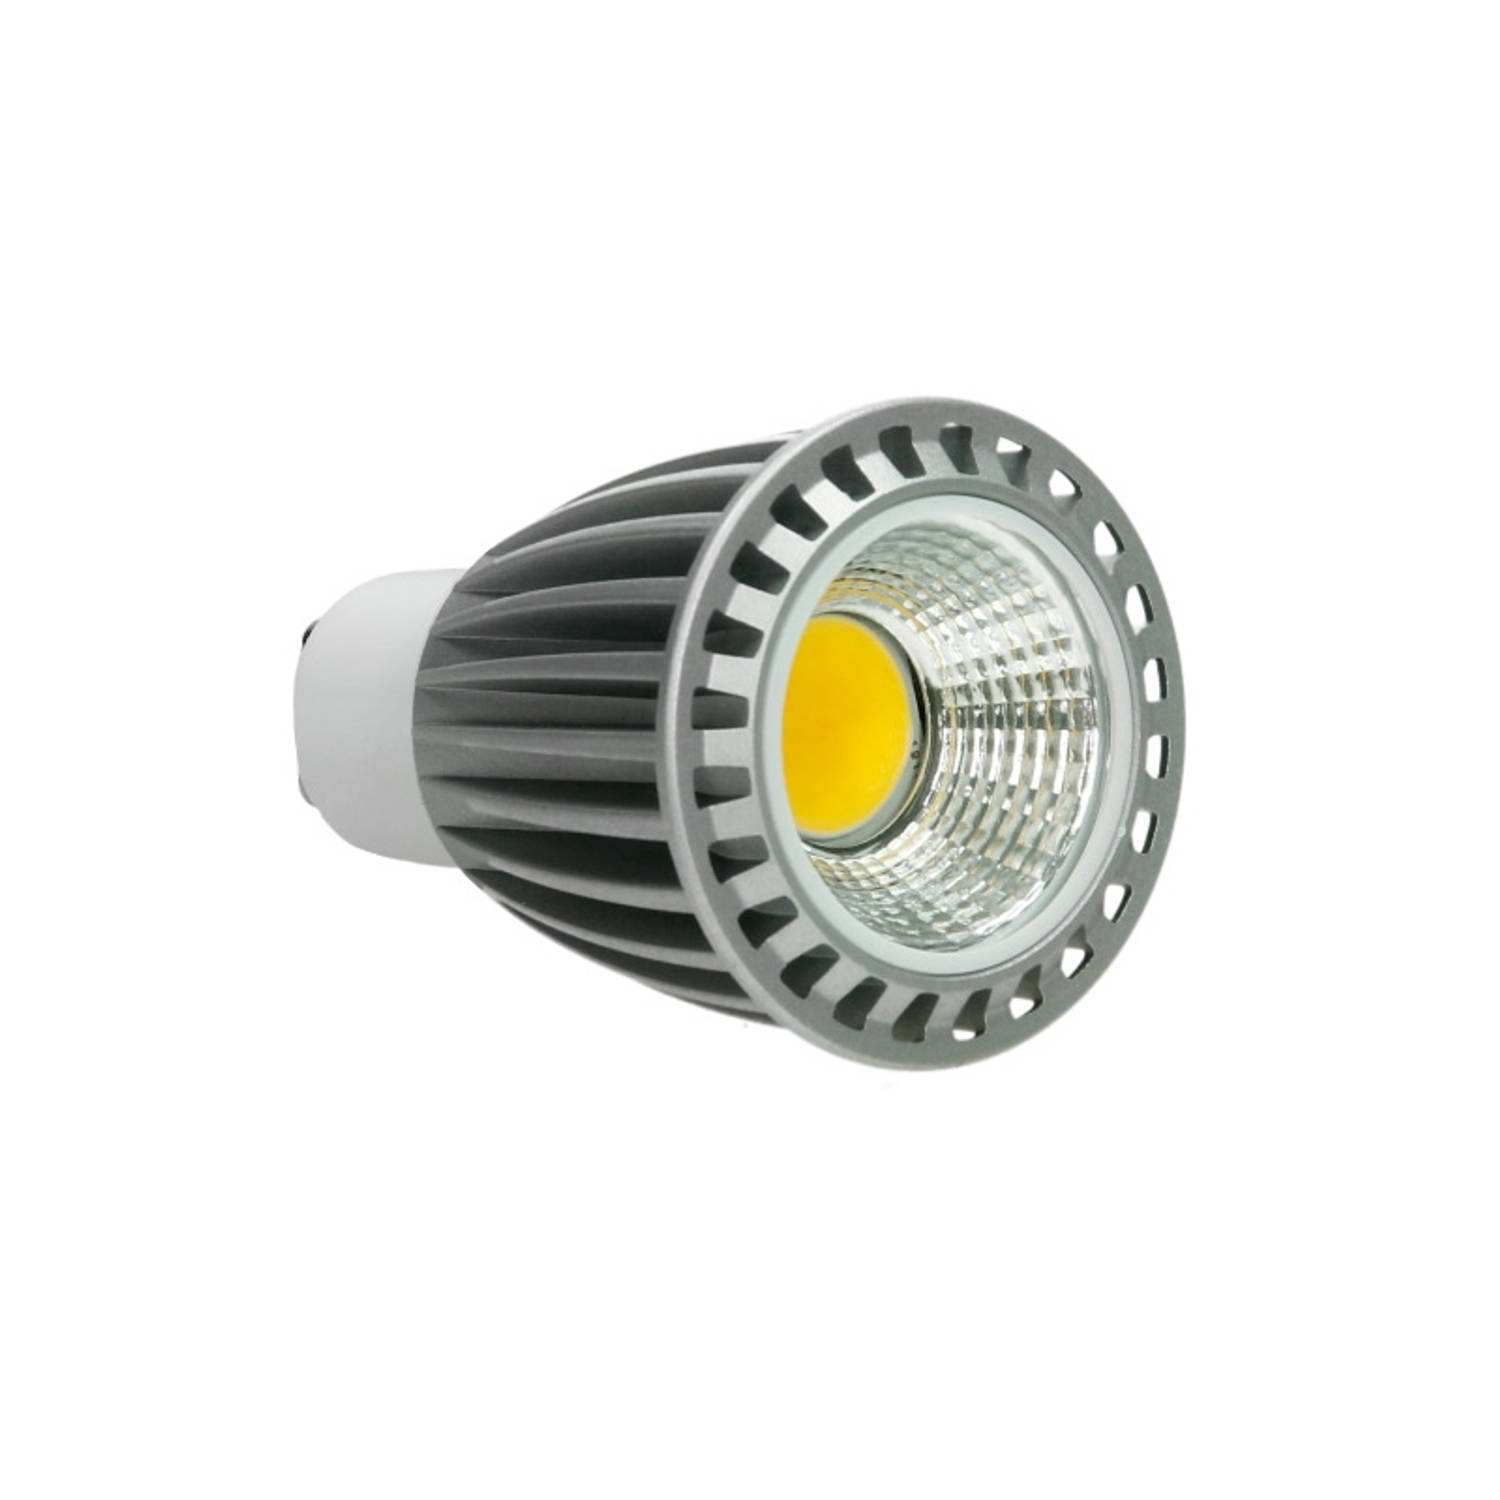 ECD Germany 20-pack 9W GU10 LED spot vervangt - 60W halogeen - 220-240V 60° stralingshoek - 552 lumen - 6000K koel wit